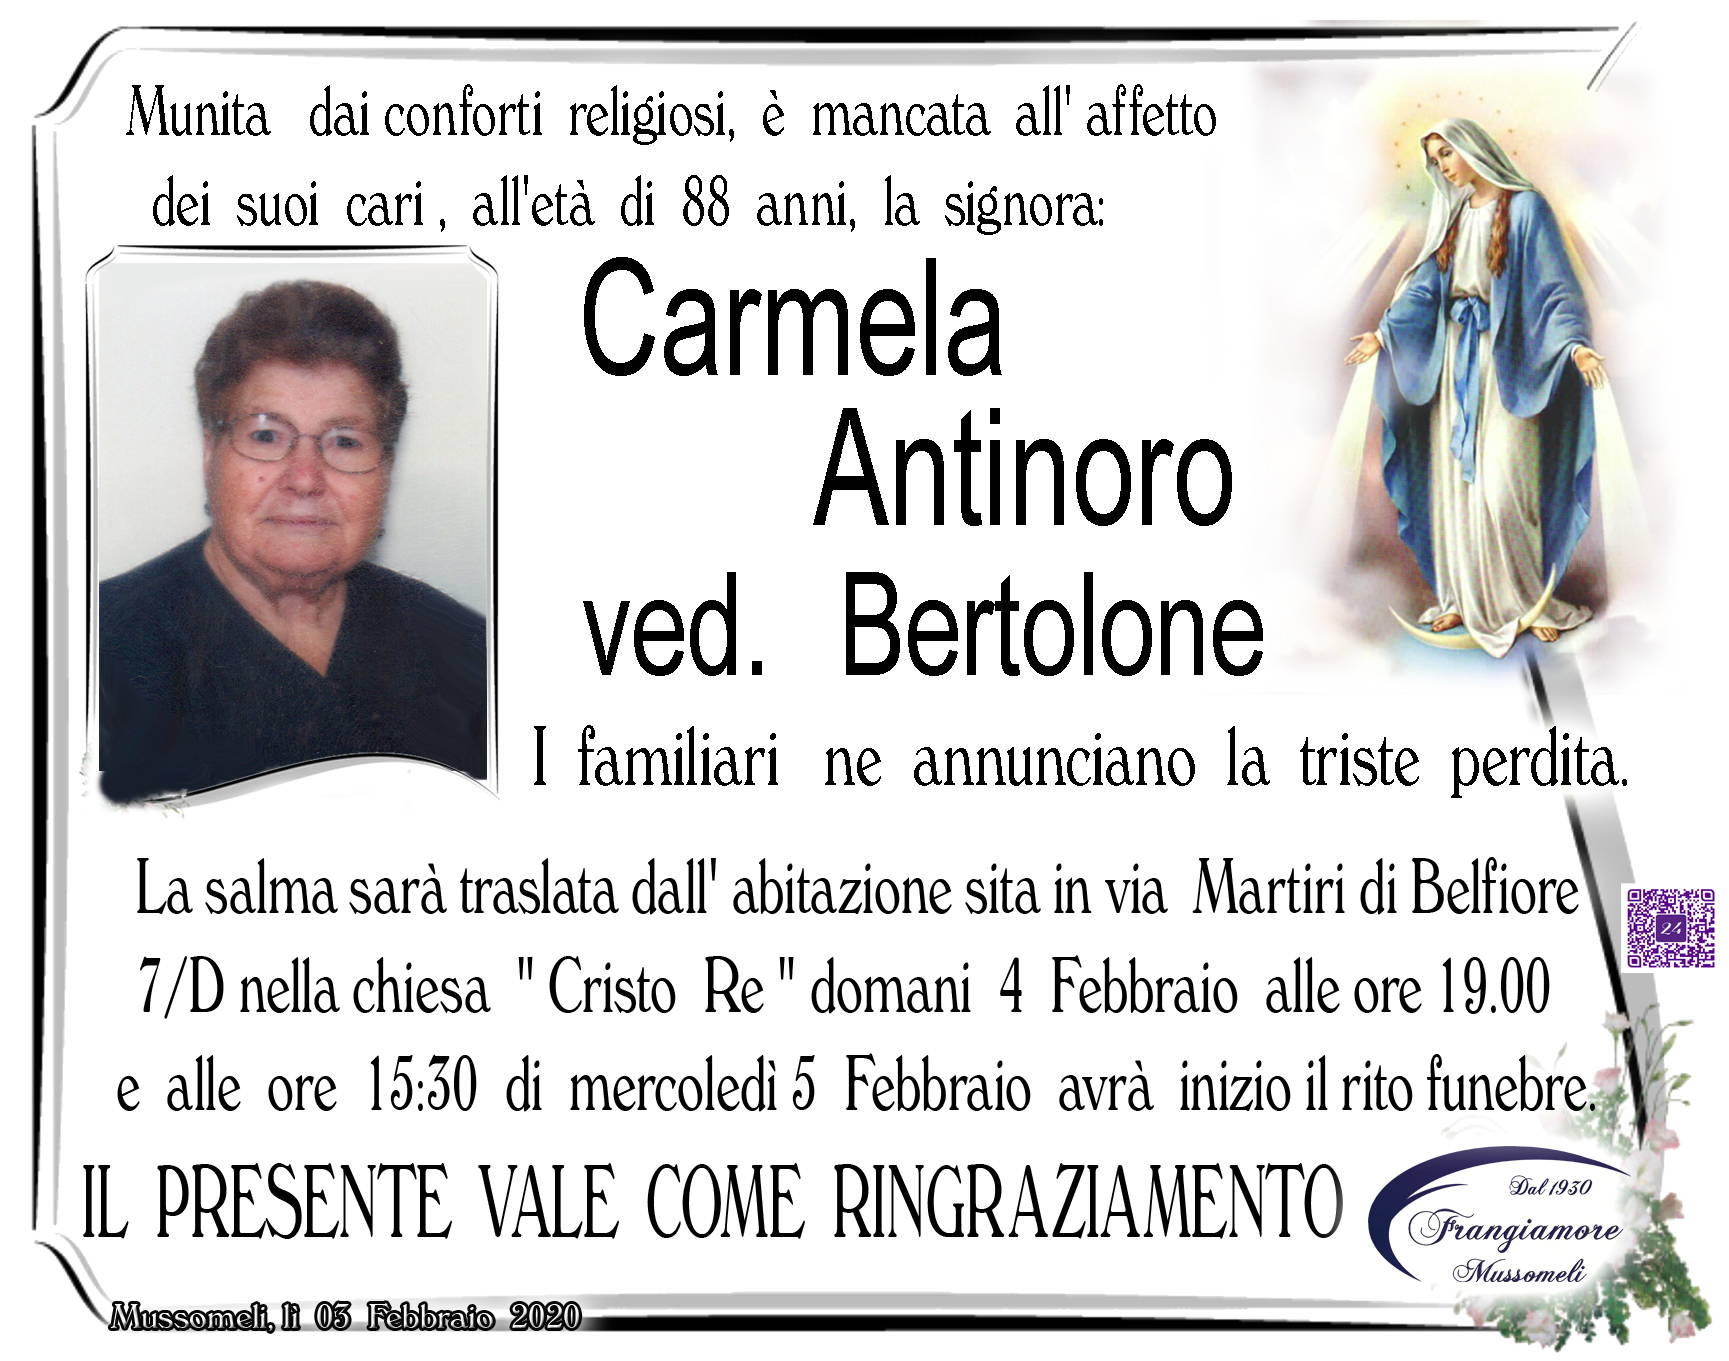 Carmela Antinoro